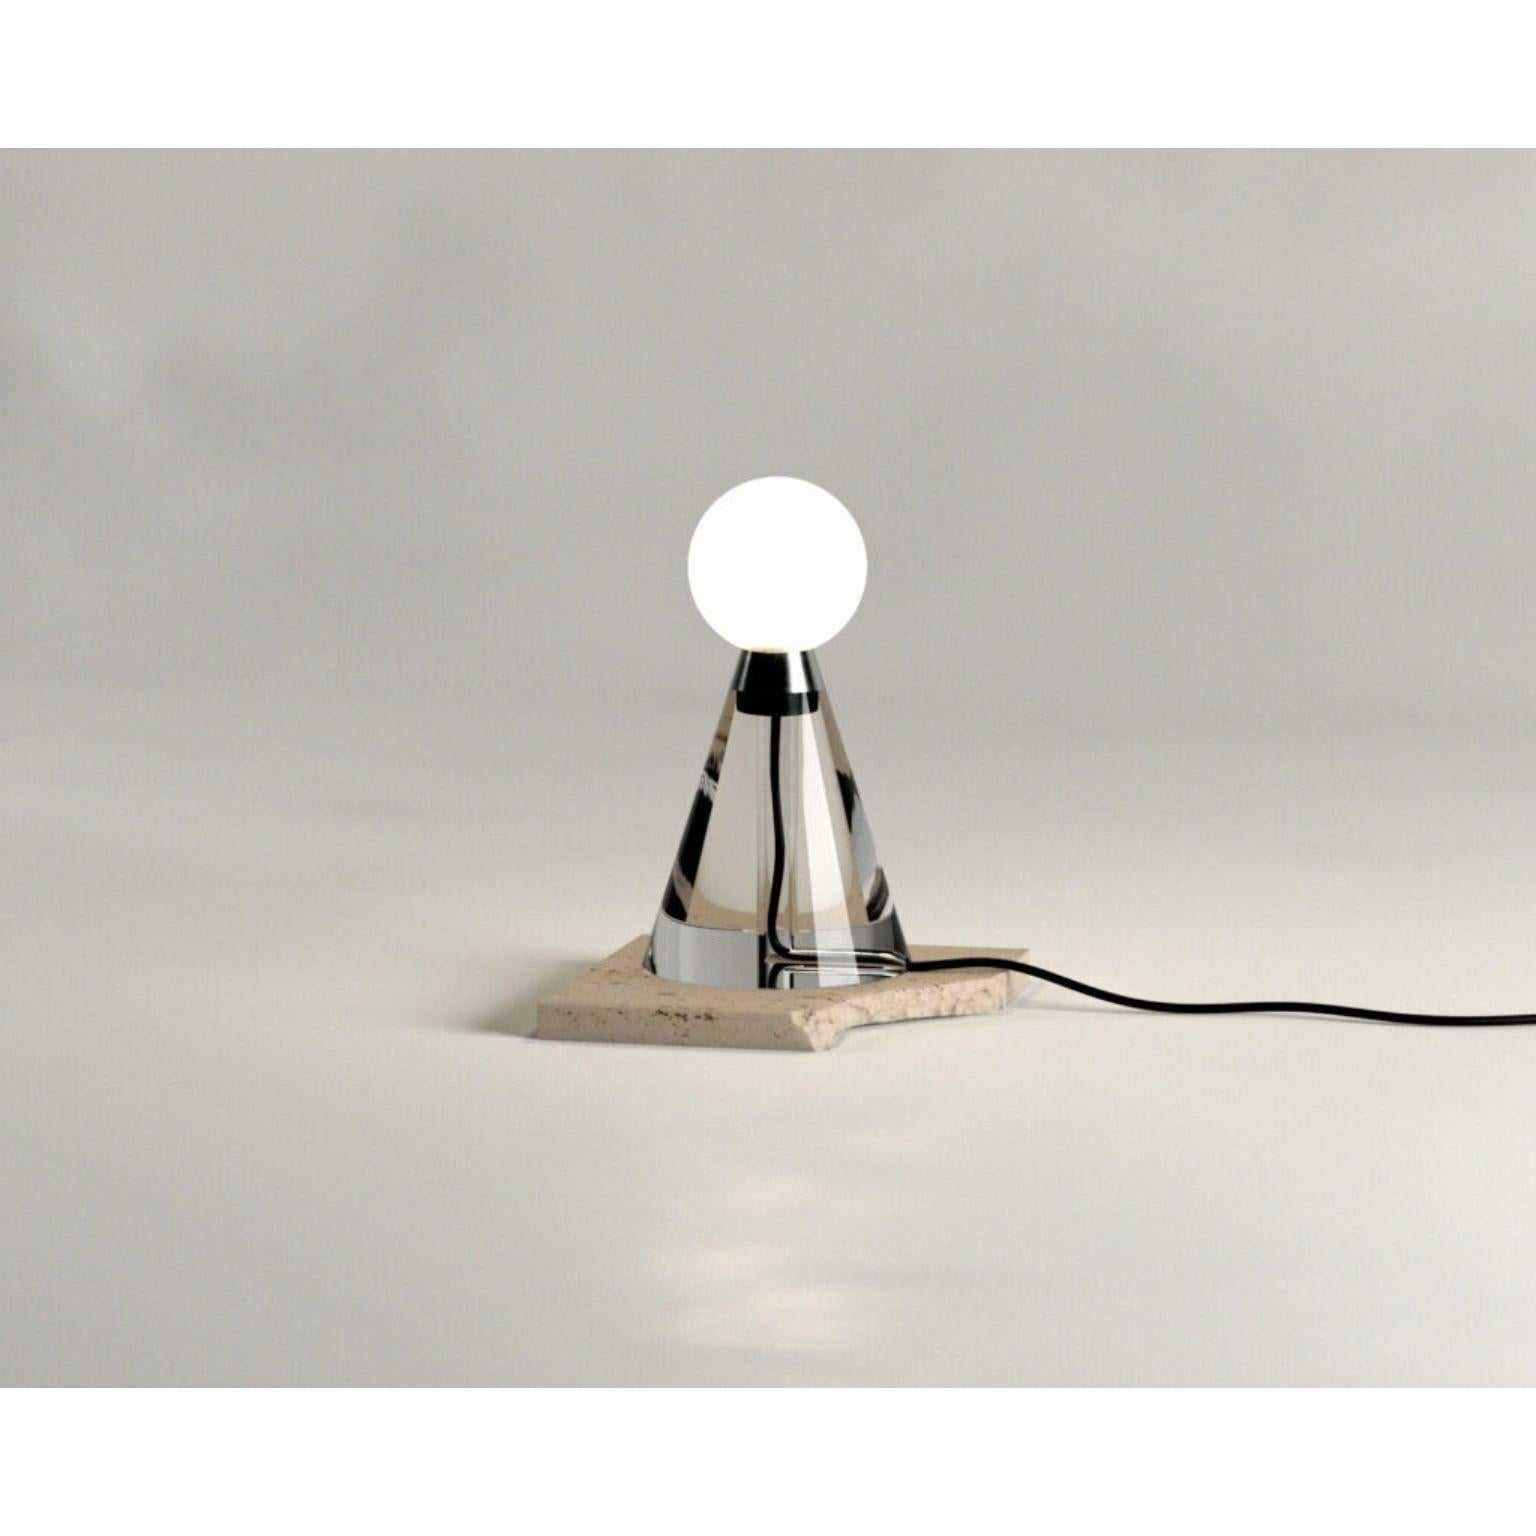 Other Walnut Mercurio Lamp by Siete Studio  For Sale